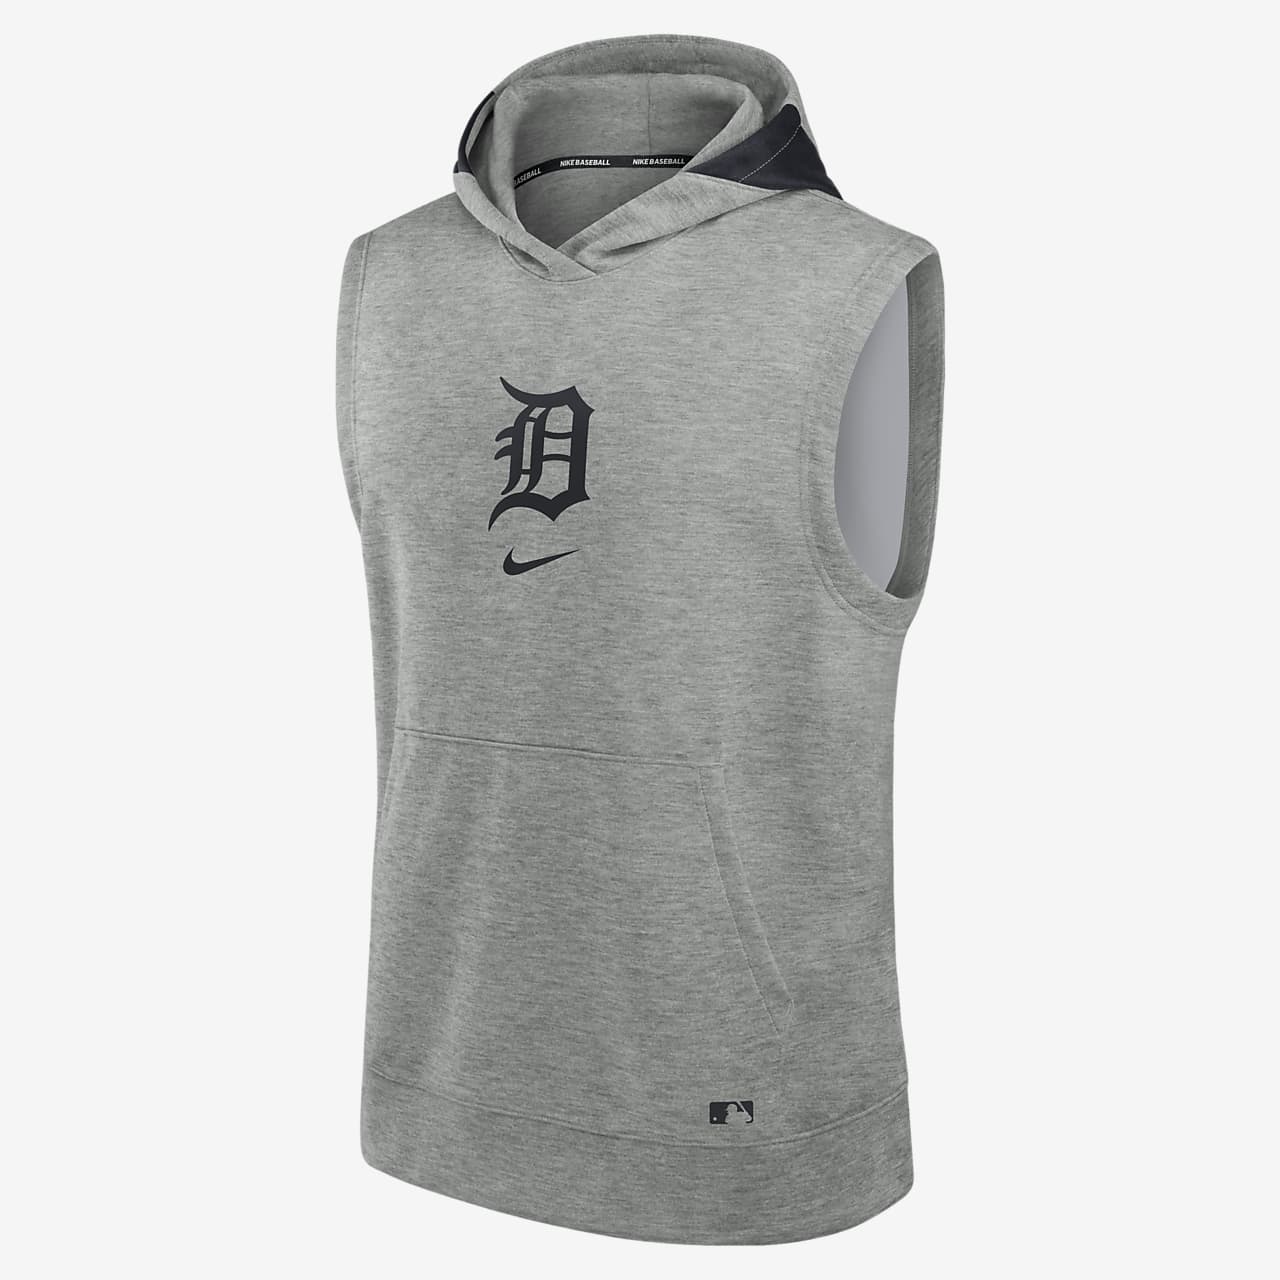 Sudadera con gorro sin cierre ni mangas Nike Dri-FIT de la MLB para hombre Detroit Tigers Authentic Collection Early Work